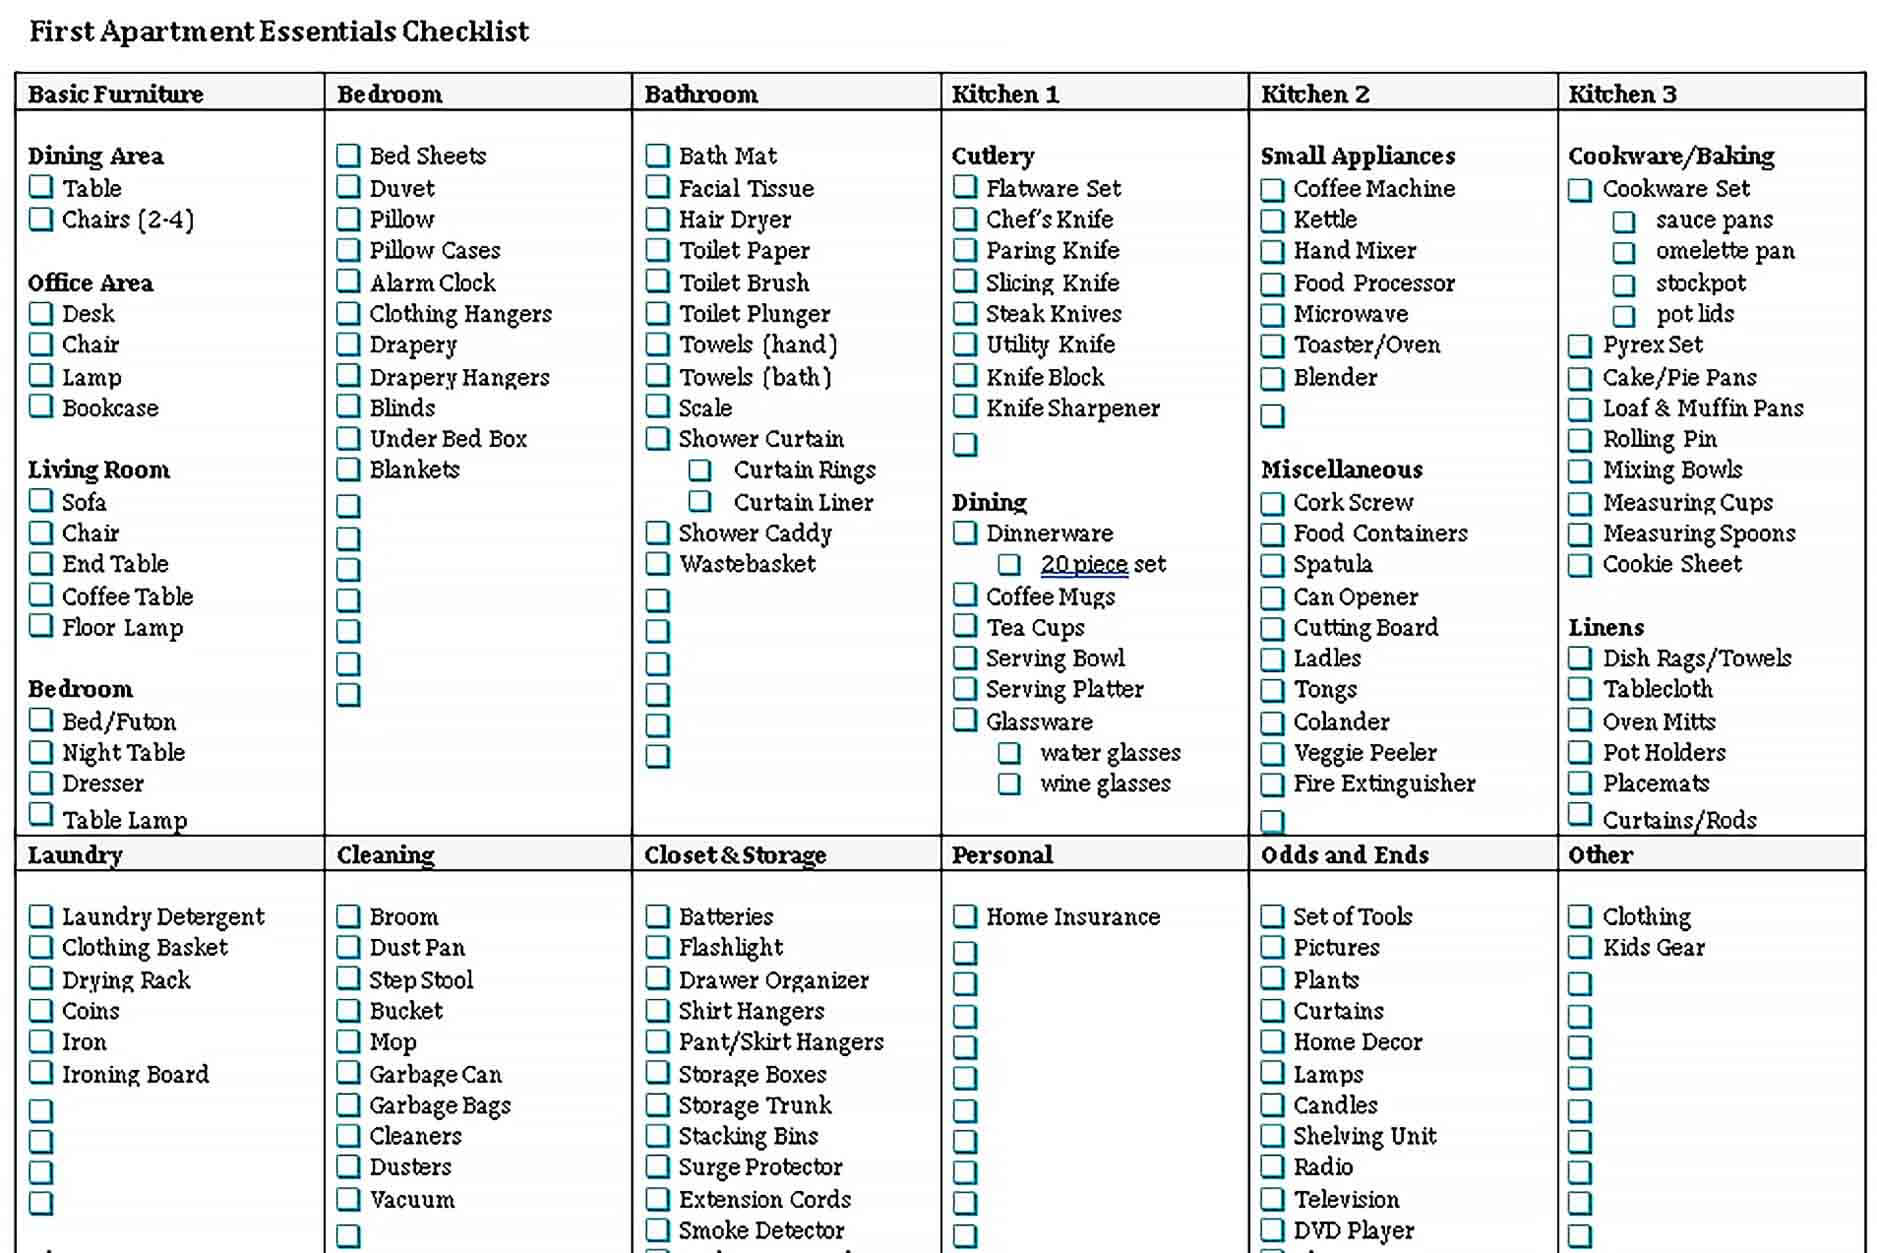 Sample Printable First Apartment Essentials Checklist